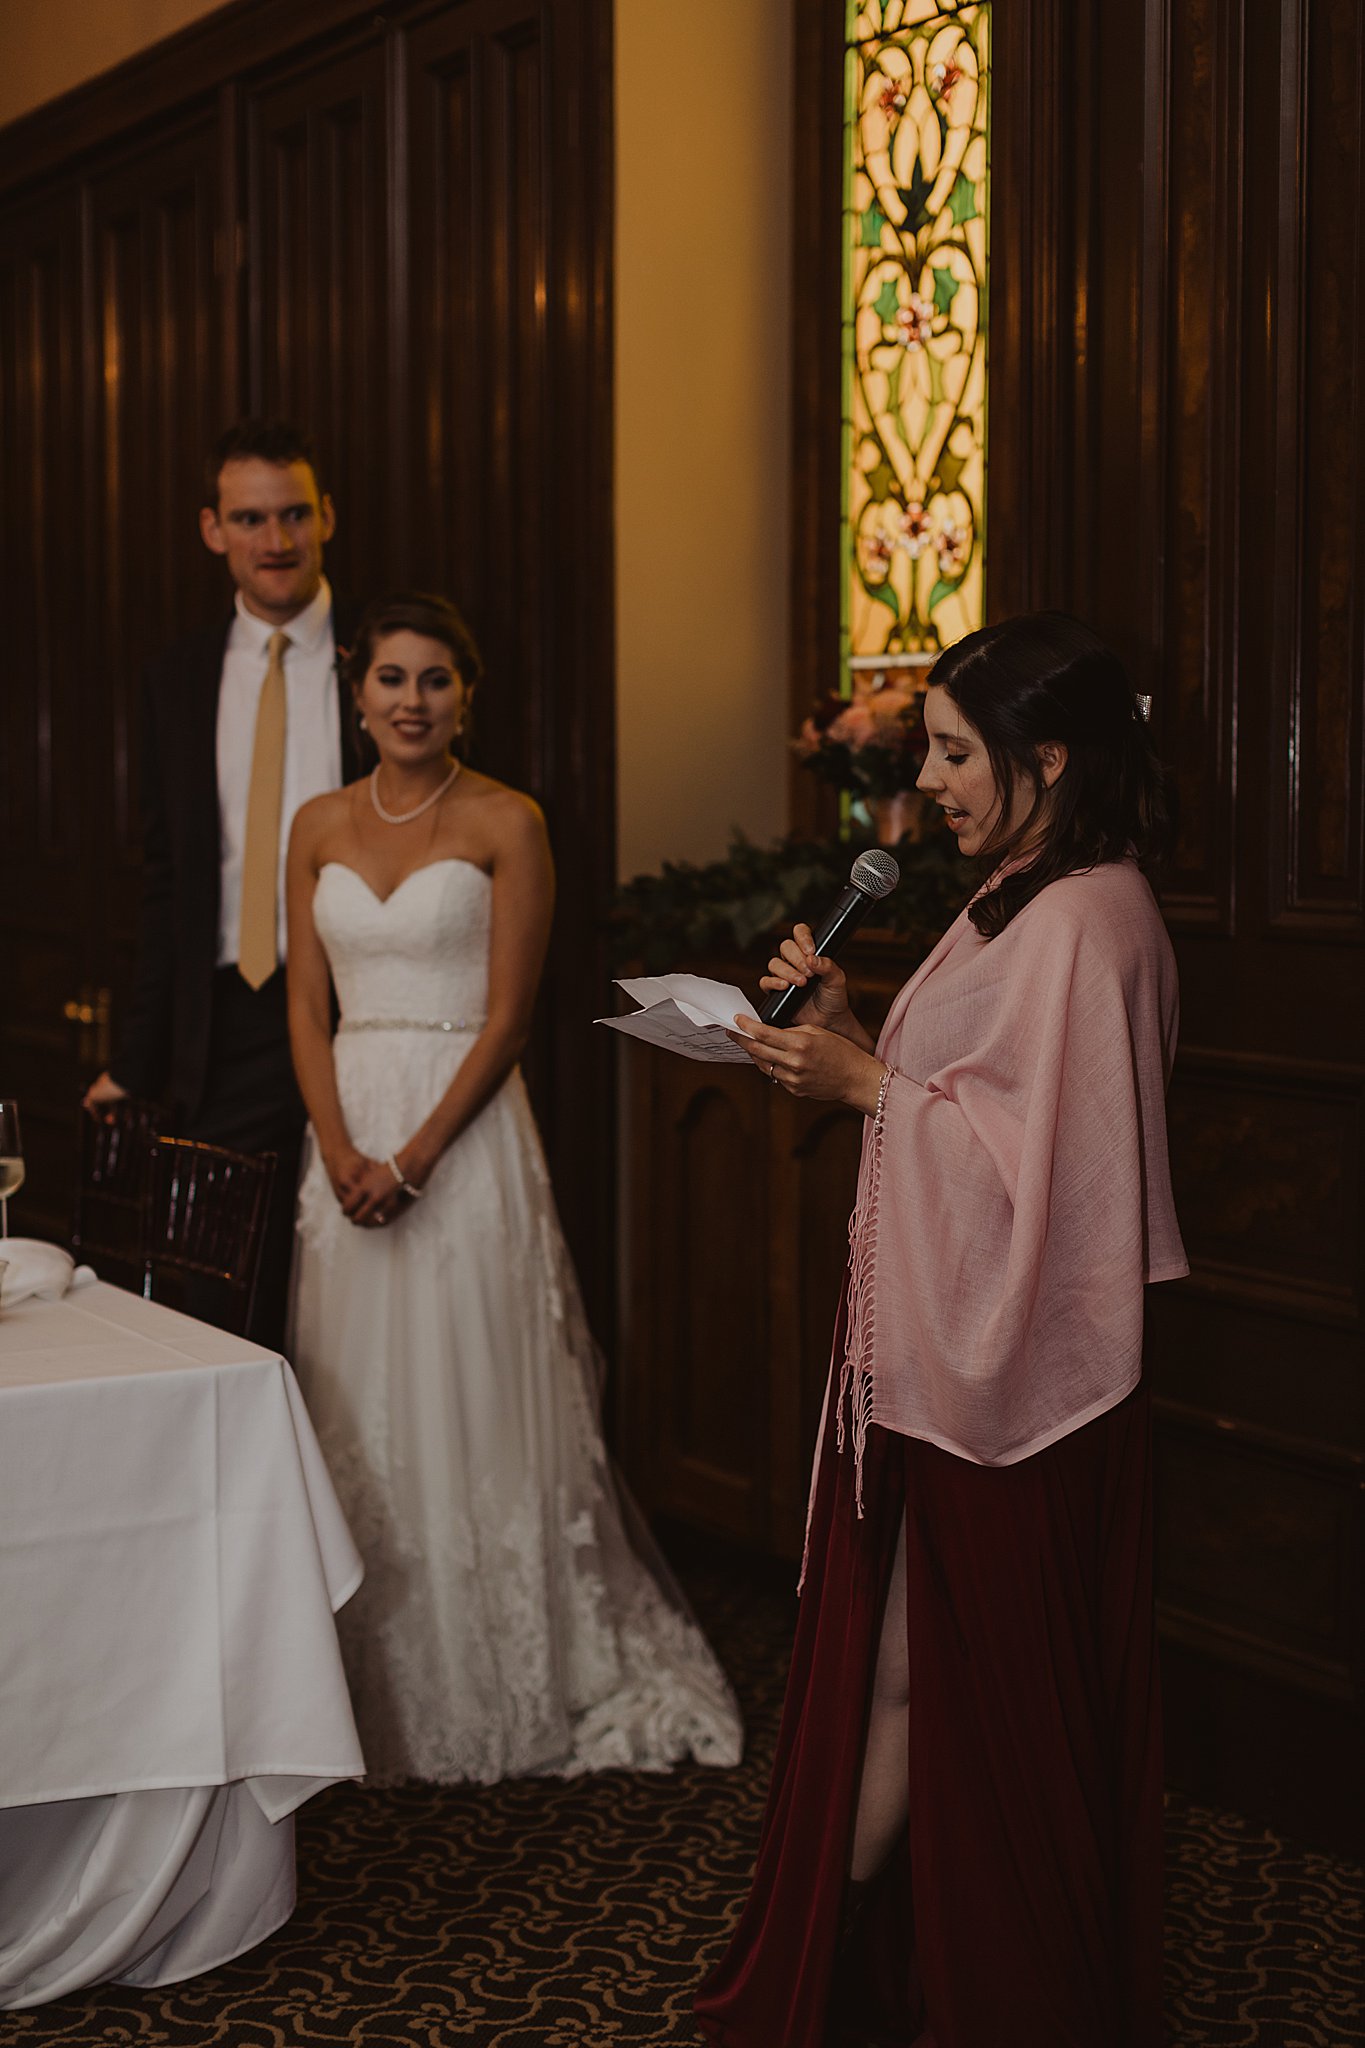 St. Louis Wedding Reception Photos